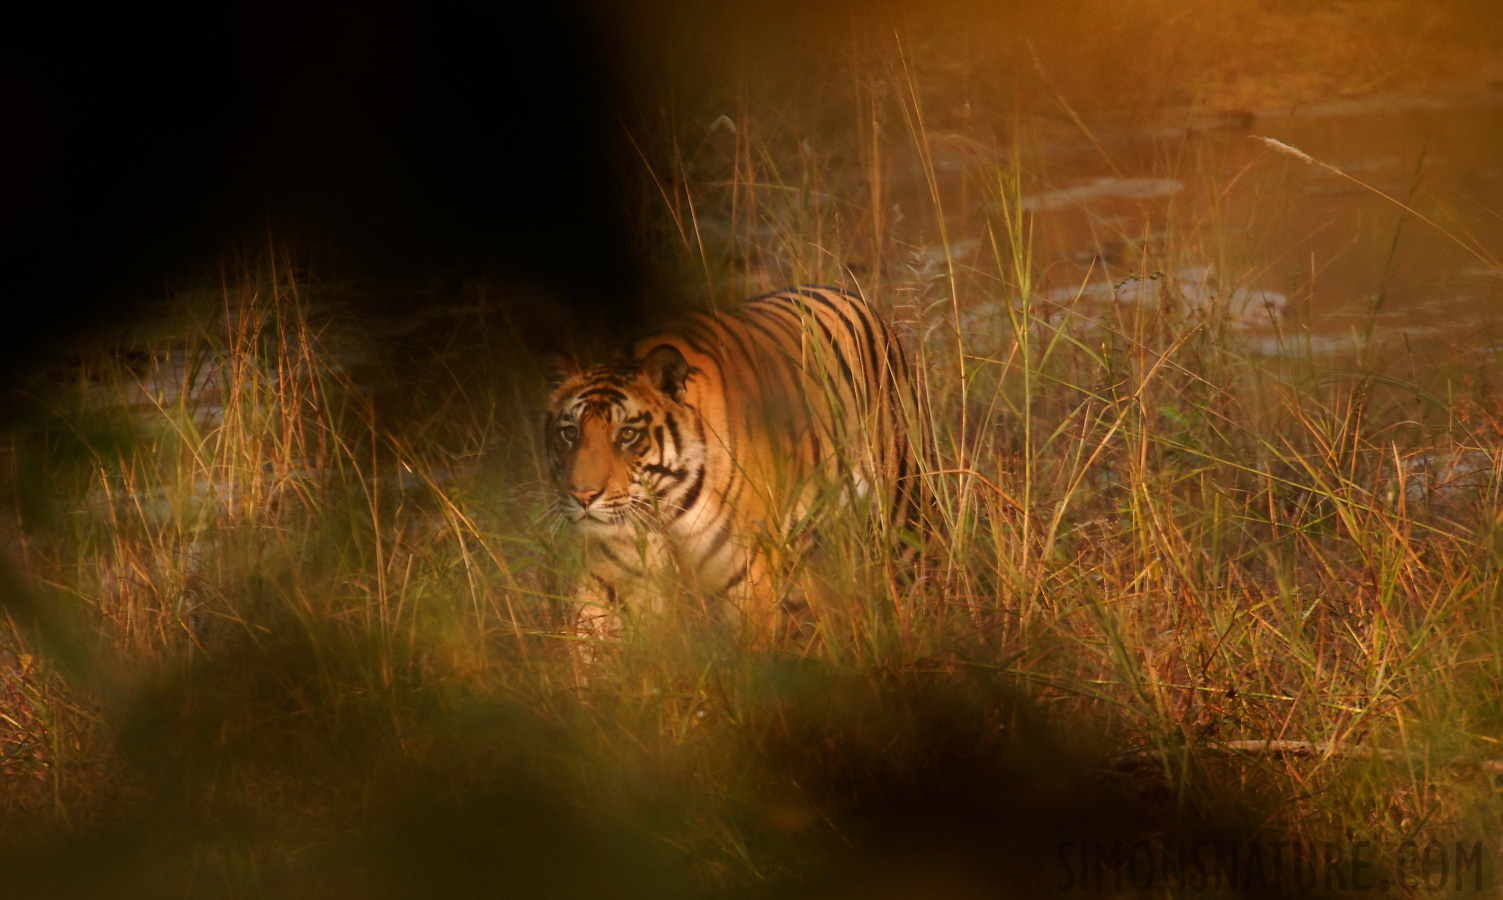 Panthera tigris tigris [550 mm, 1/100 sec at f / 5.6, ISO 400]